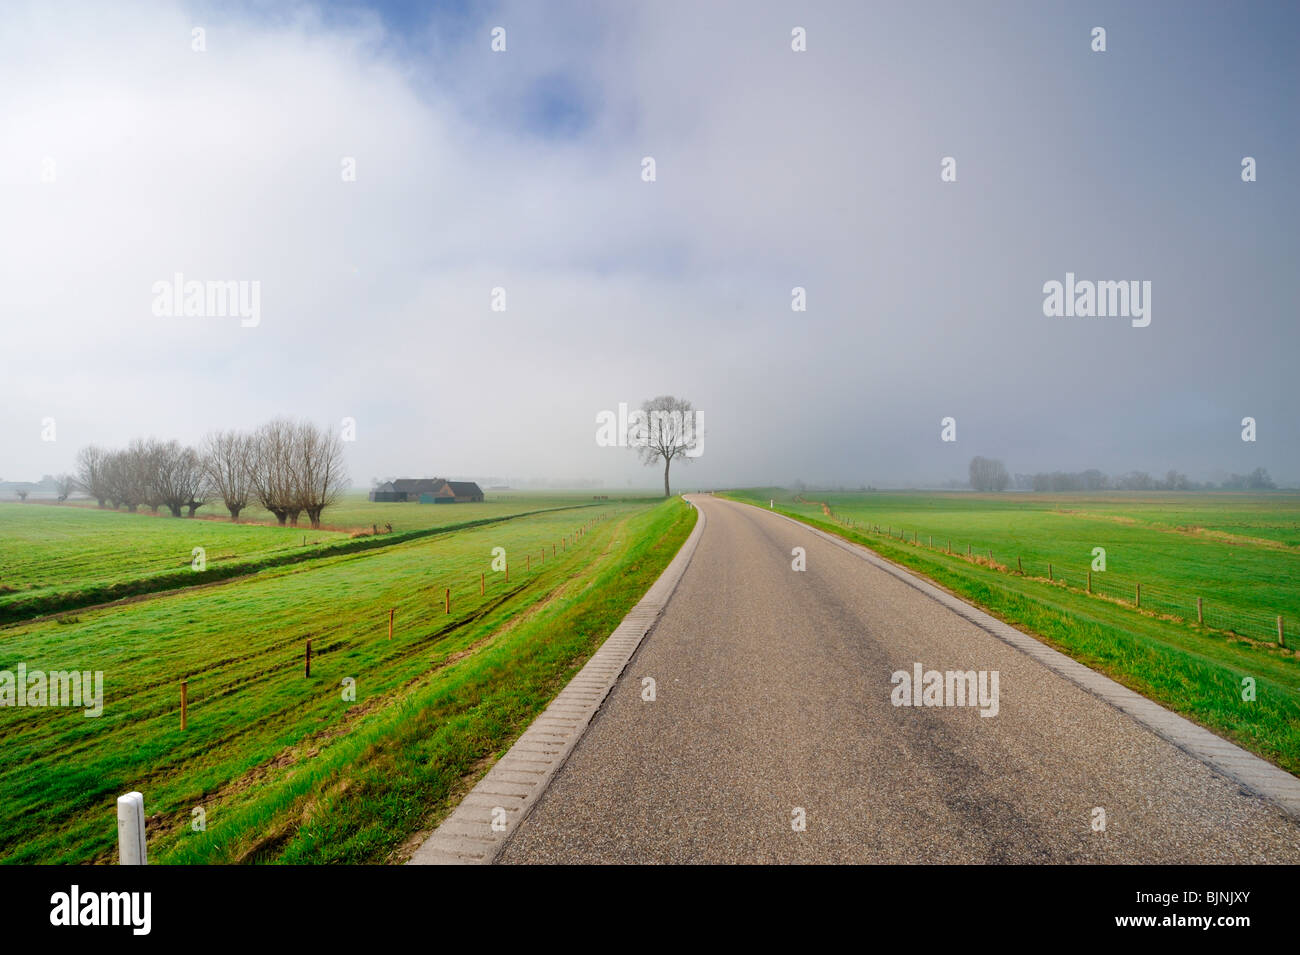 country road in the netherlands Zalk Overijssel Stock Photo